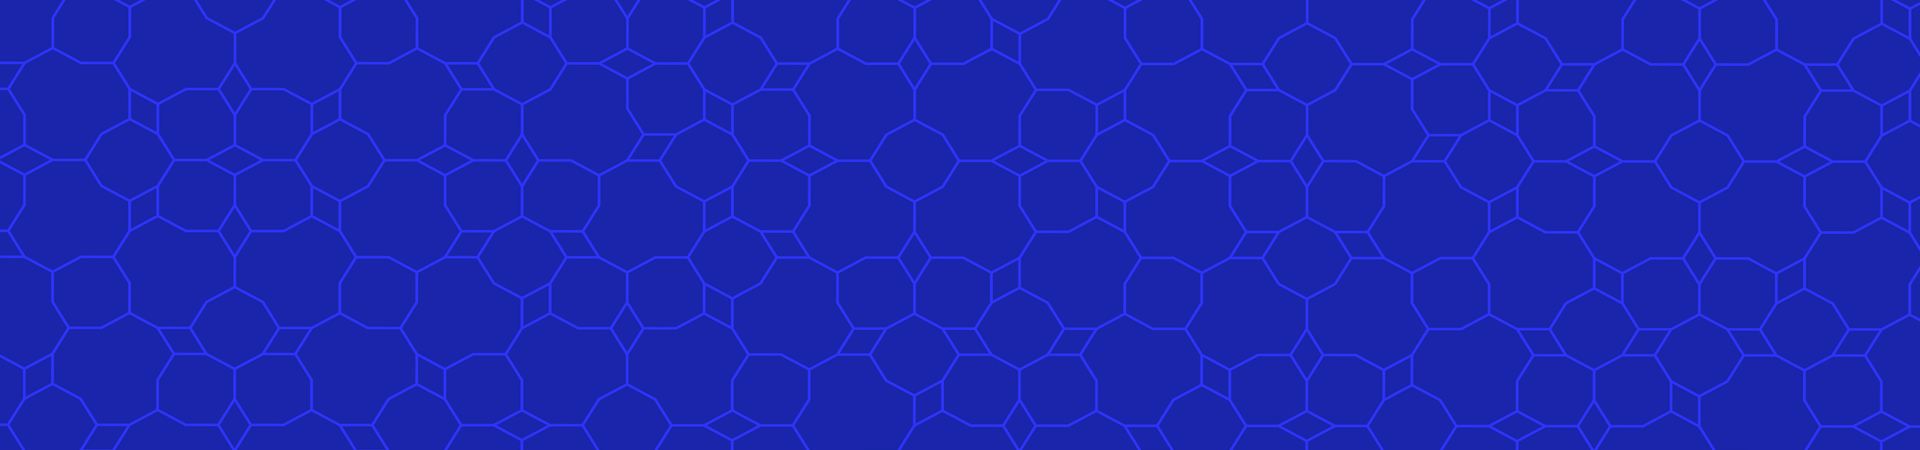 A textured blue background